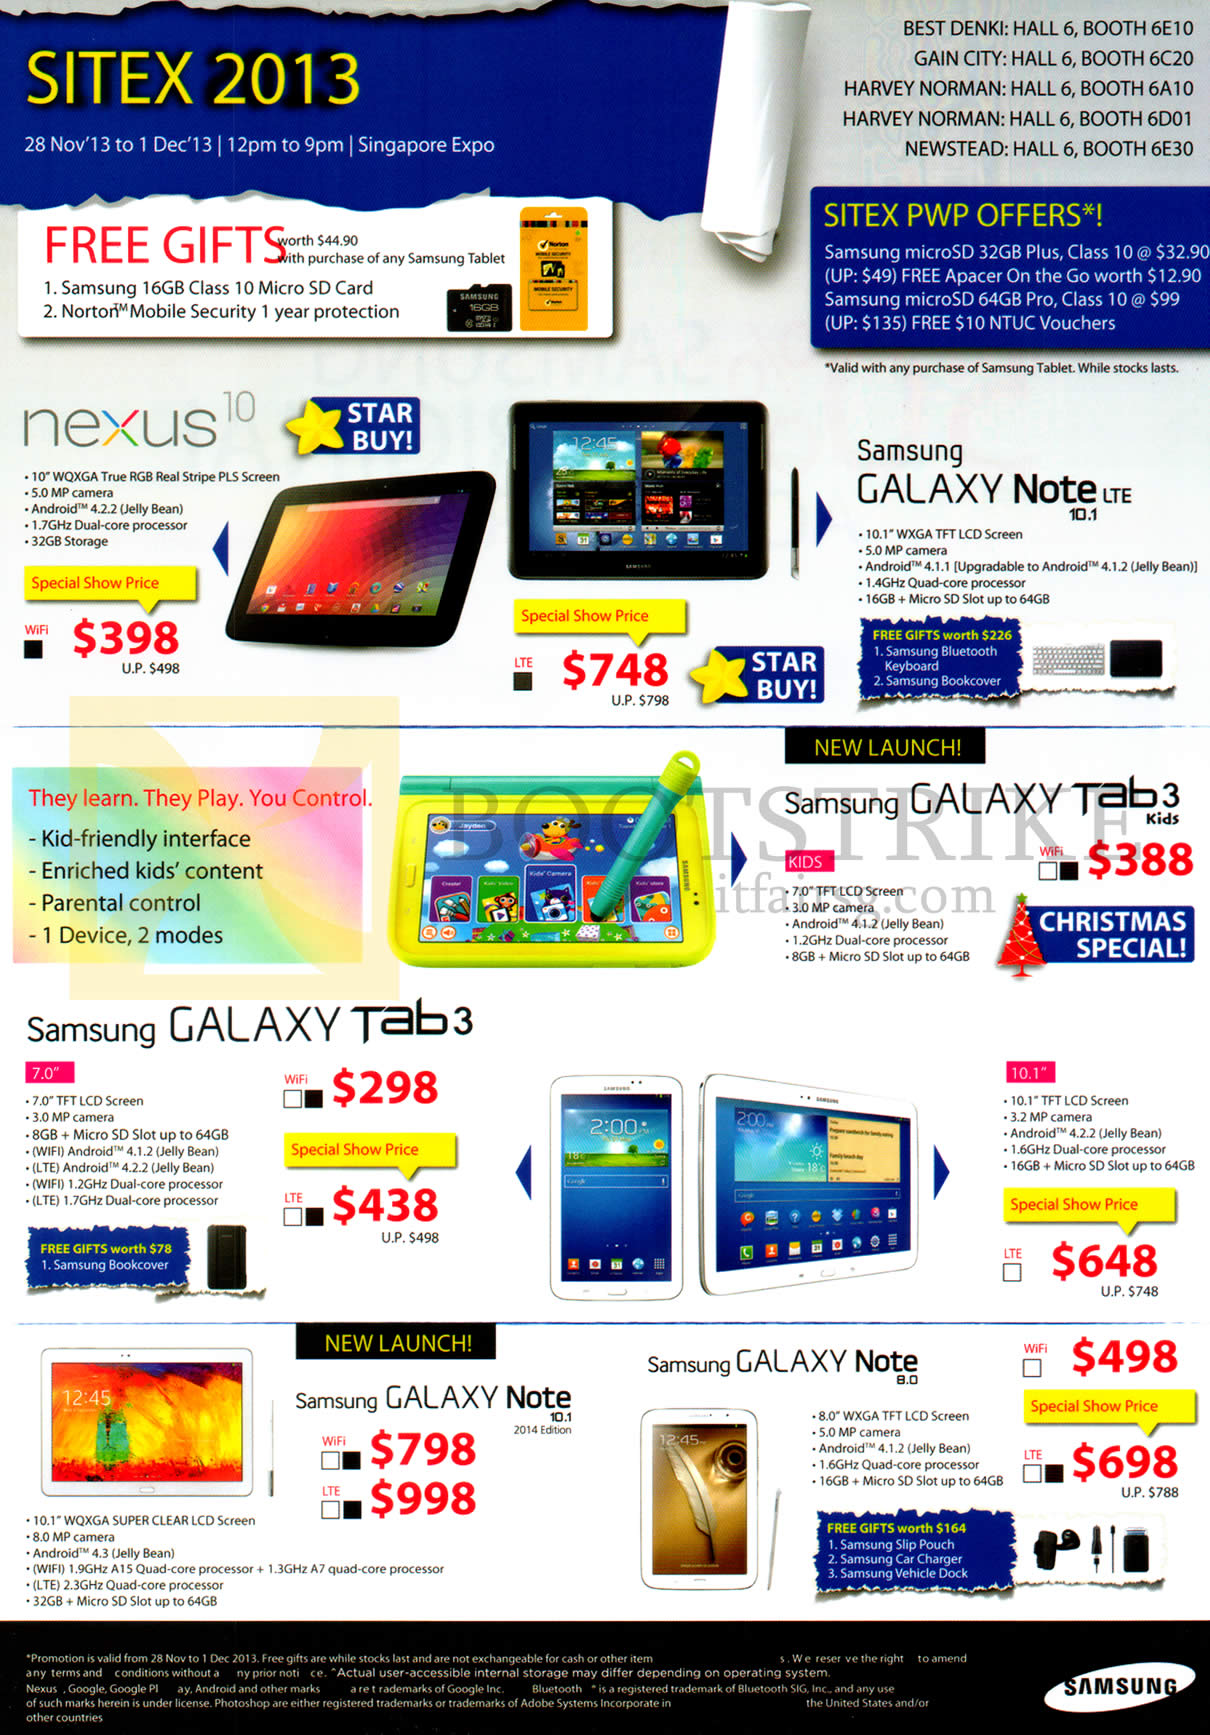 SITEX 2013 price list image brochure of Samsung Tablets Nexus 10, Galaxy Note 10.1 LTE, Tab 3 7.0, Tab 3 Kids, Note 10.1, Note 8.0